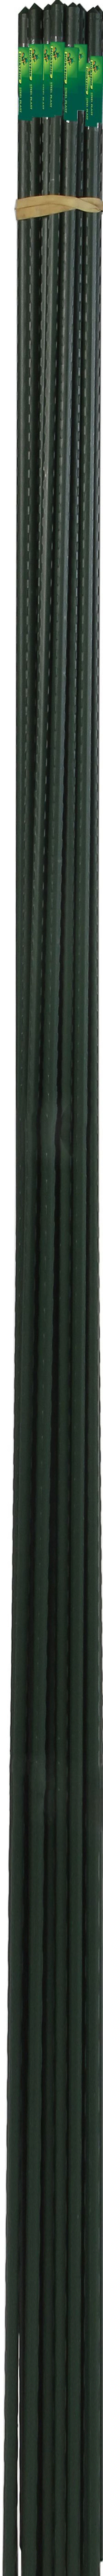 Tuteur acier plastifié Vert ⌀16mm 210cm - INTERMAS